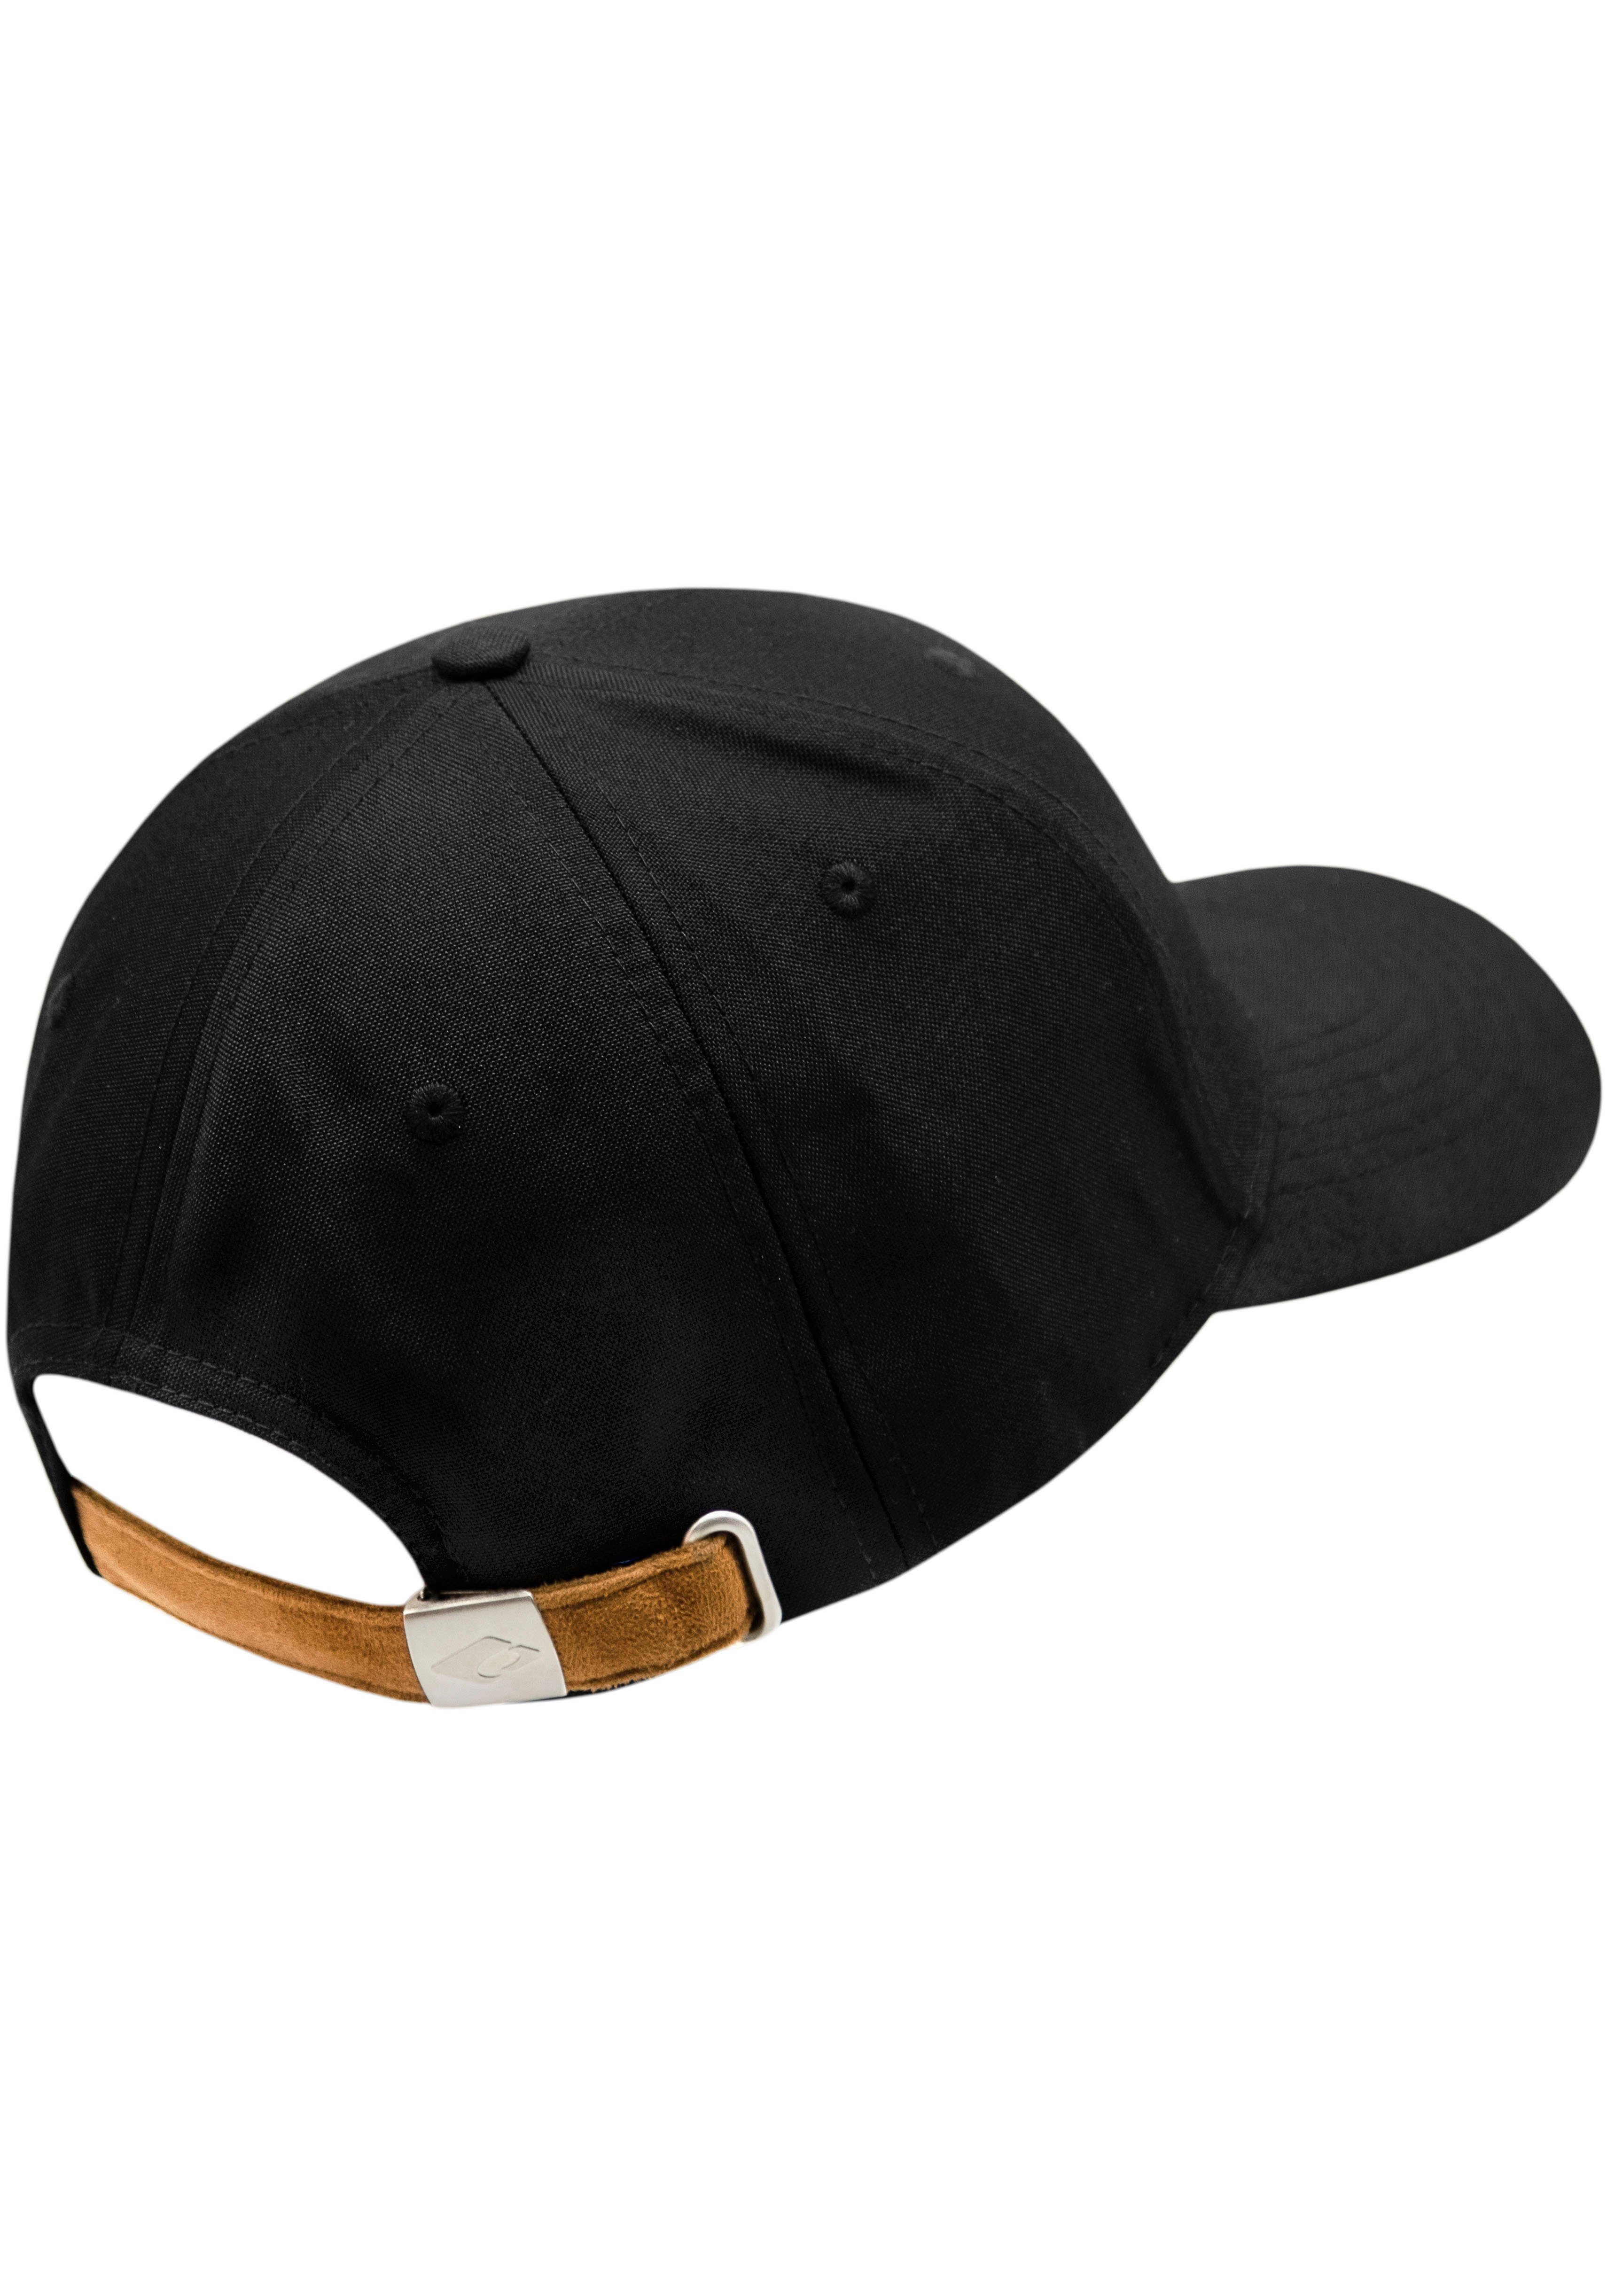 chillouts Baseball Cap melierter Optik, in Hat Size, Amadora verstellbar One schwarz